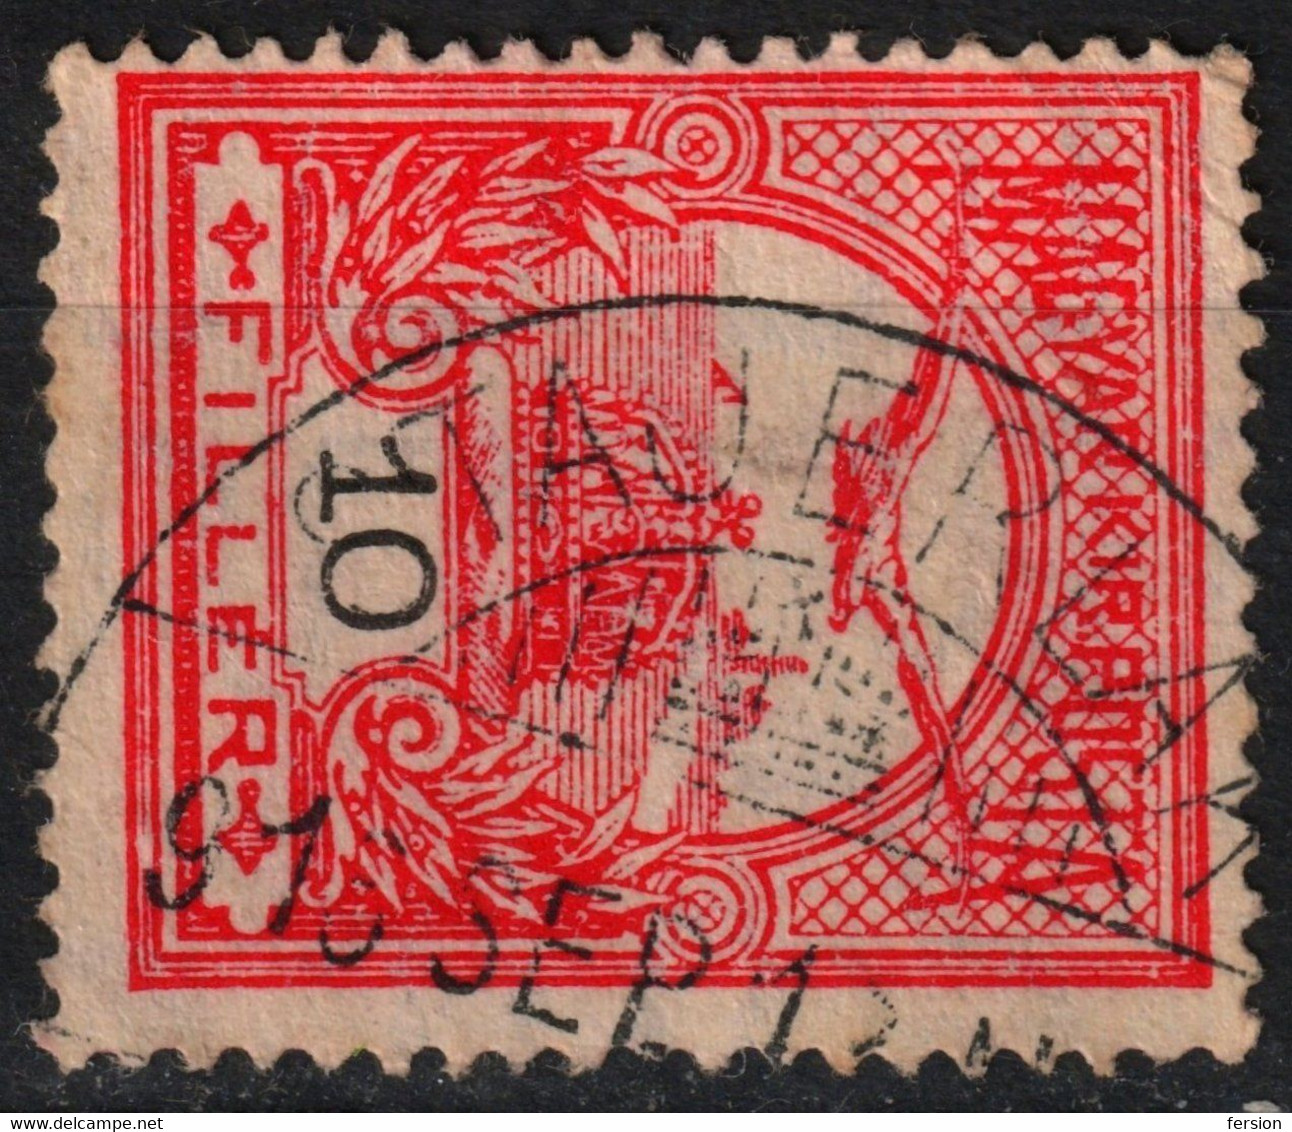 Stájerlak Steierdorf Crown Postmark / TURUL WMK 7. 1915 Hungary Romania Transylvania Caraș-Severin Banat KuK - 10 Fill - Transylvanie